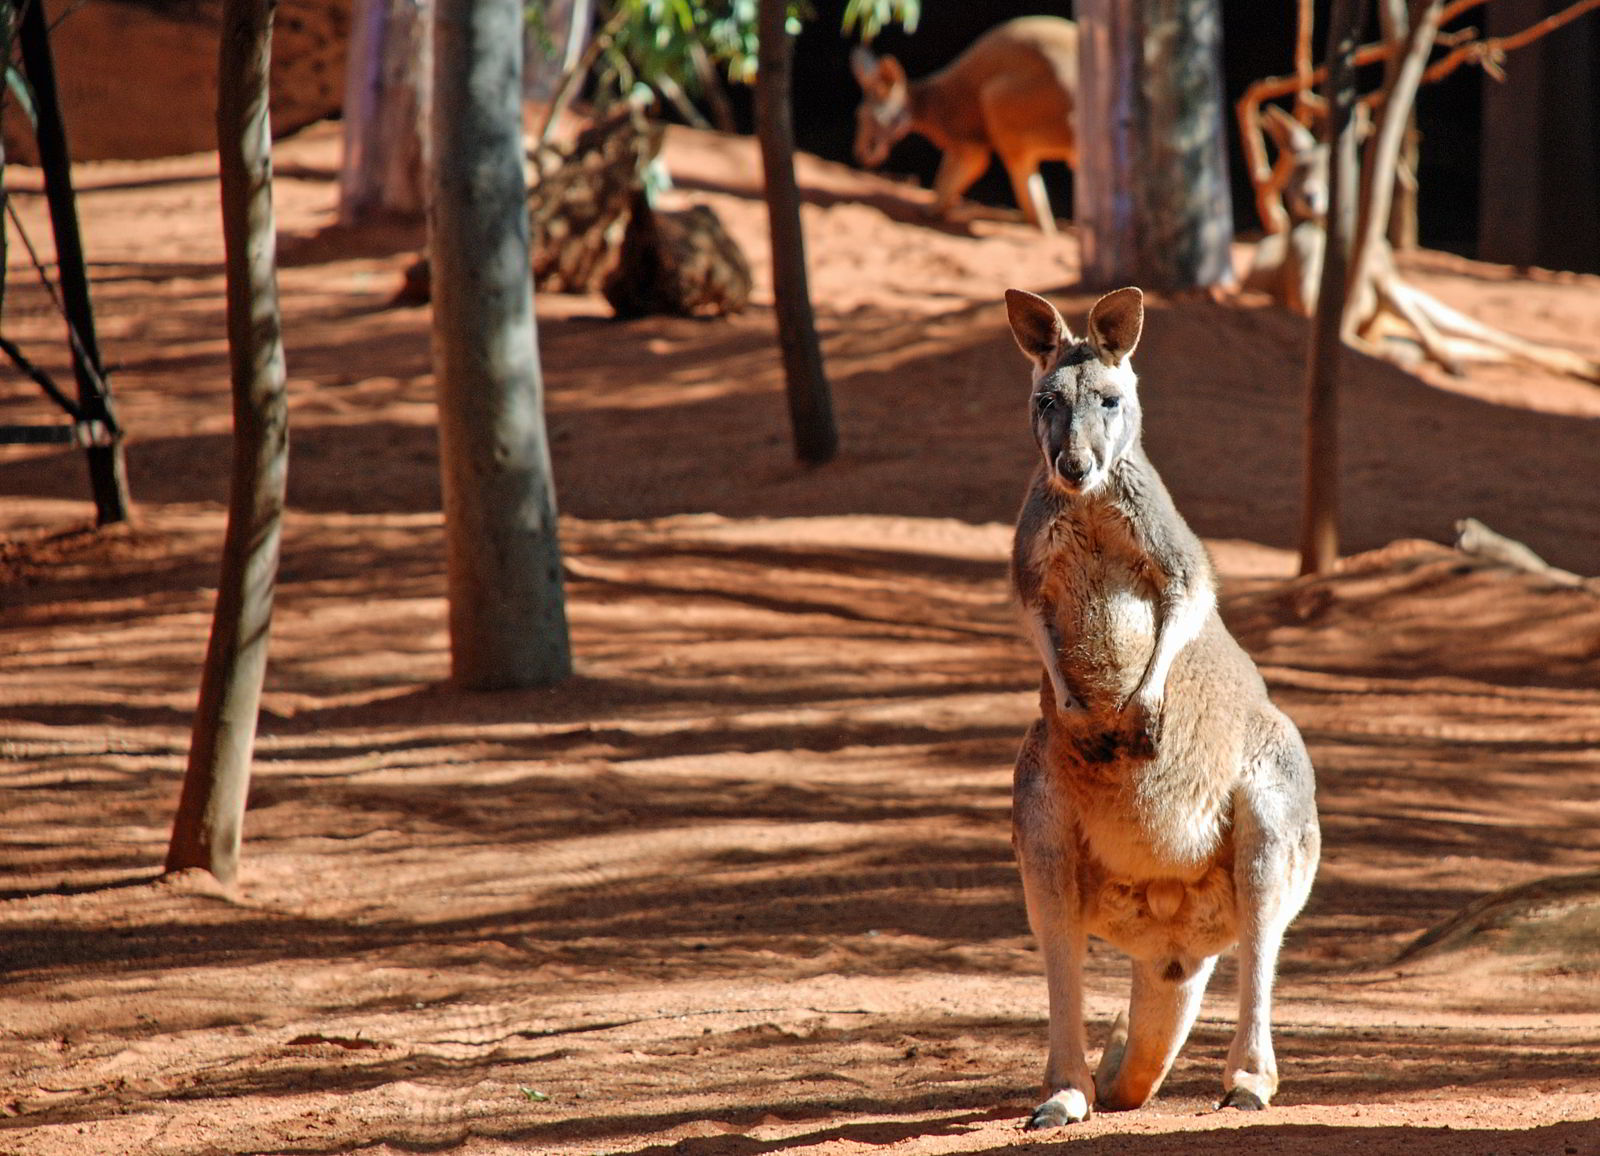 An image of a big grey kangaroo in Queensland, Australia